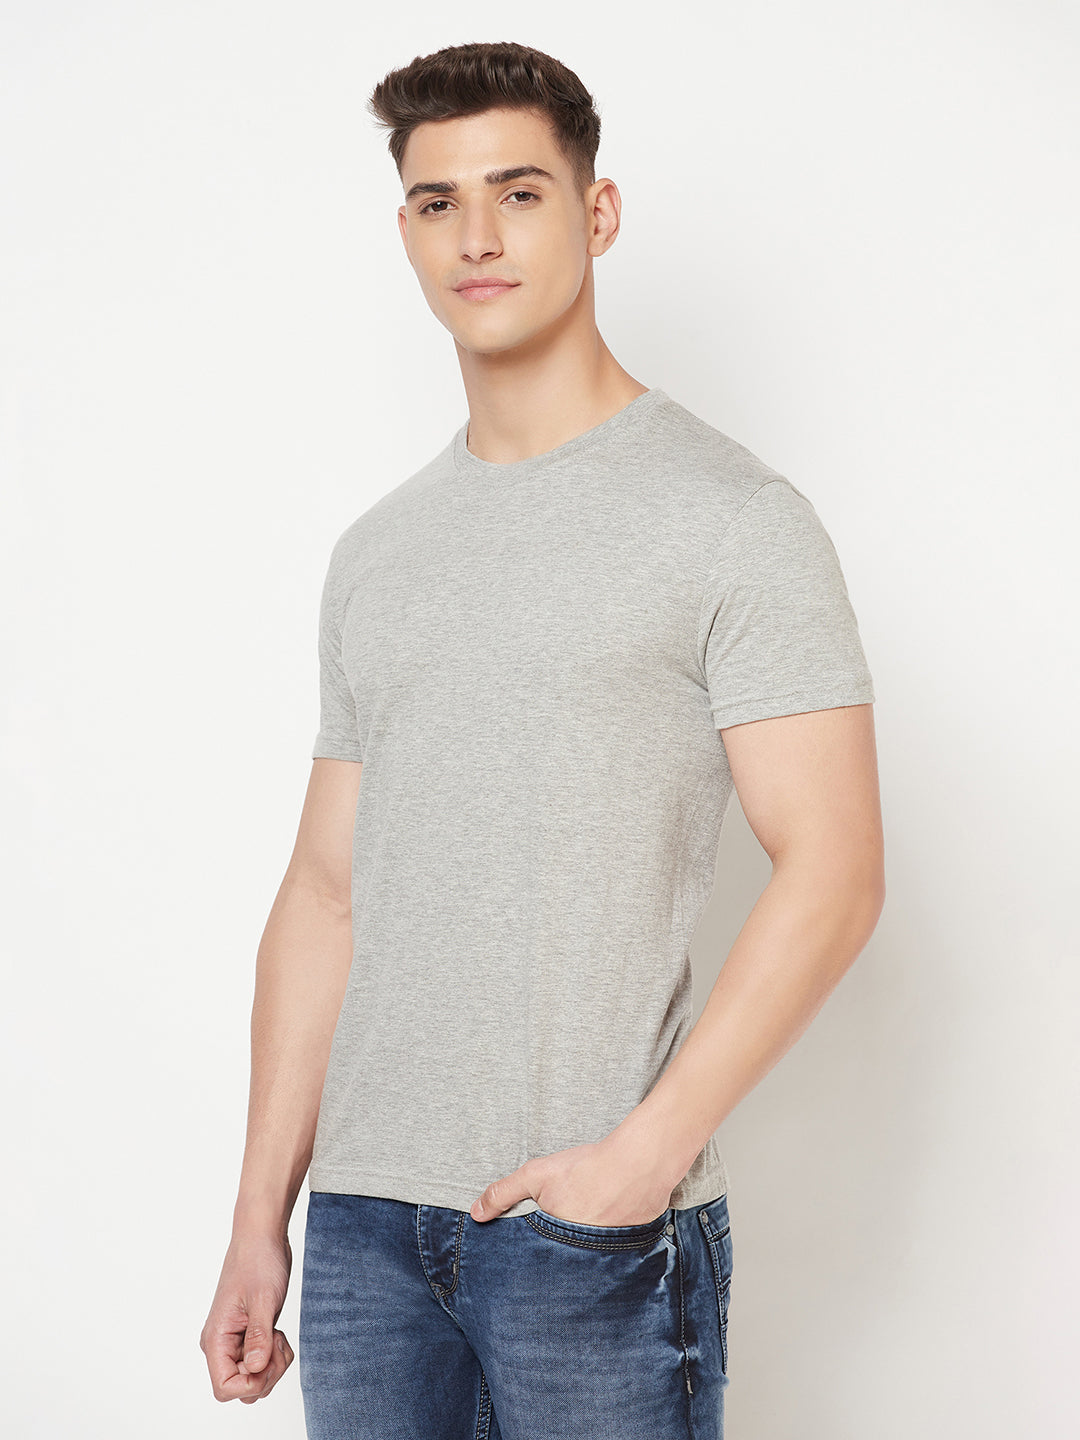 Premium Cotton Tshirts  (Pack of 2- Grey,Blue)